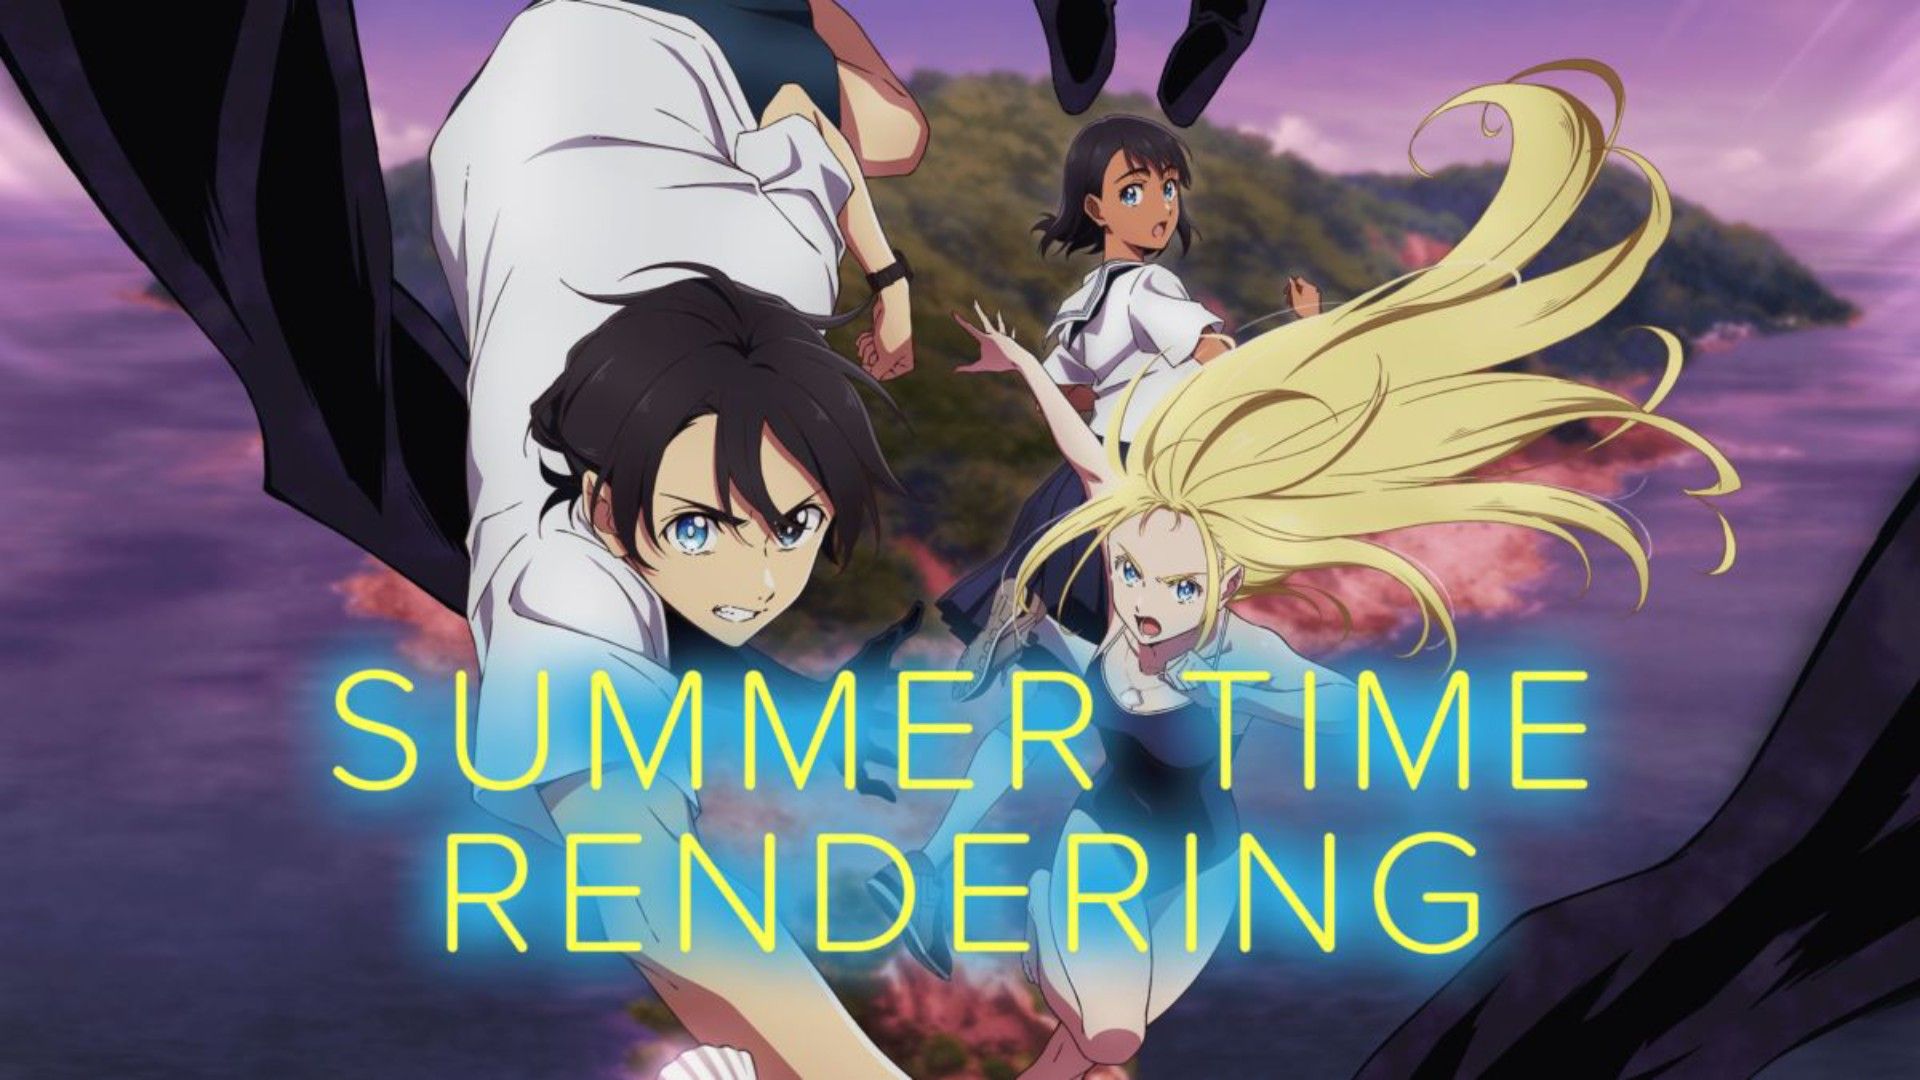 Summertime Render Dublado - Episódio 2 - Animes Online